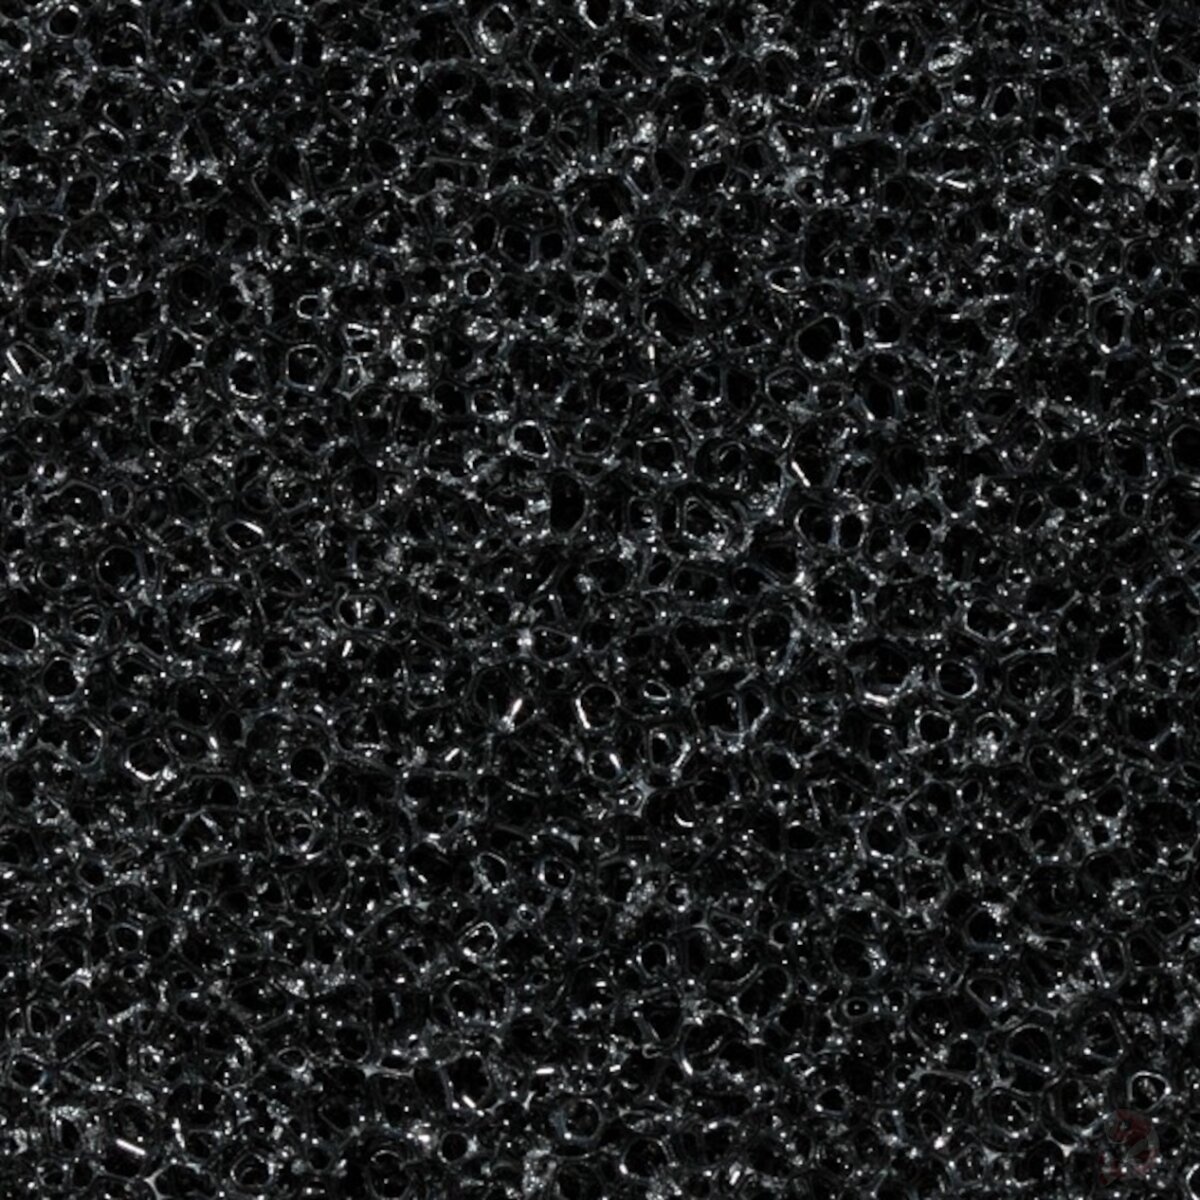 Filtermatte schwarz, 50 x 50 x 5 cm, 30 ppi